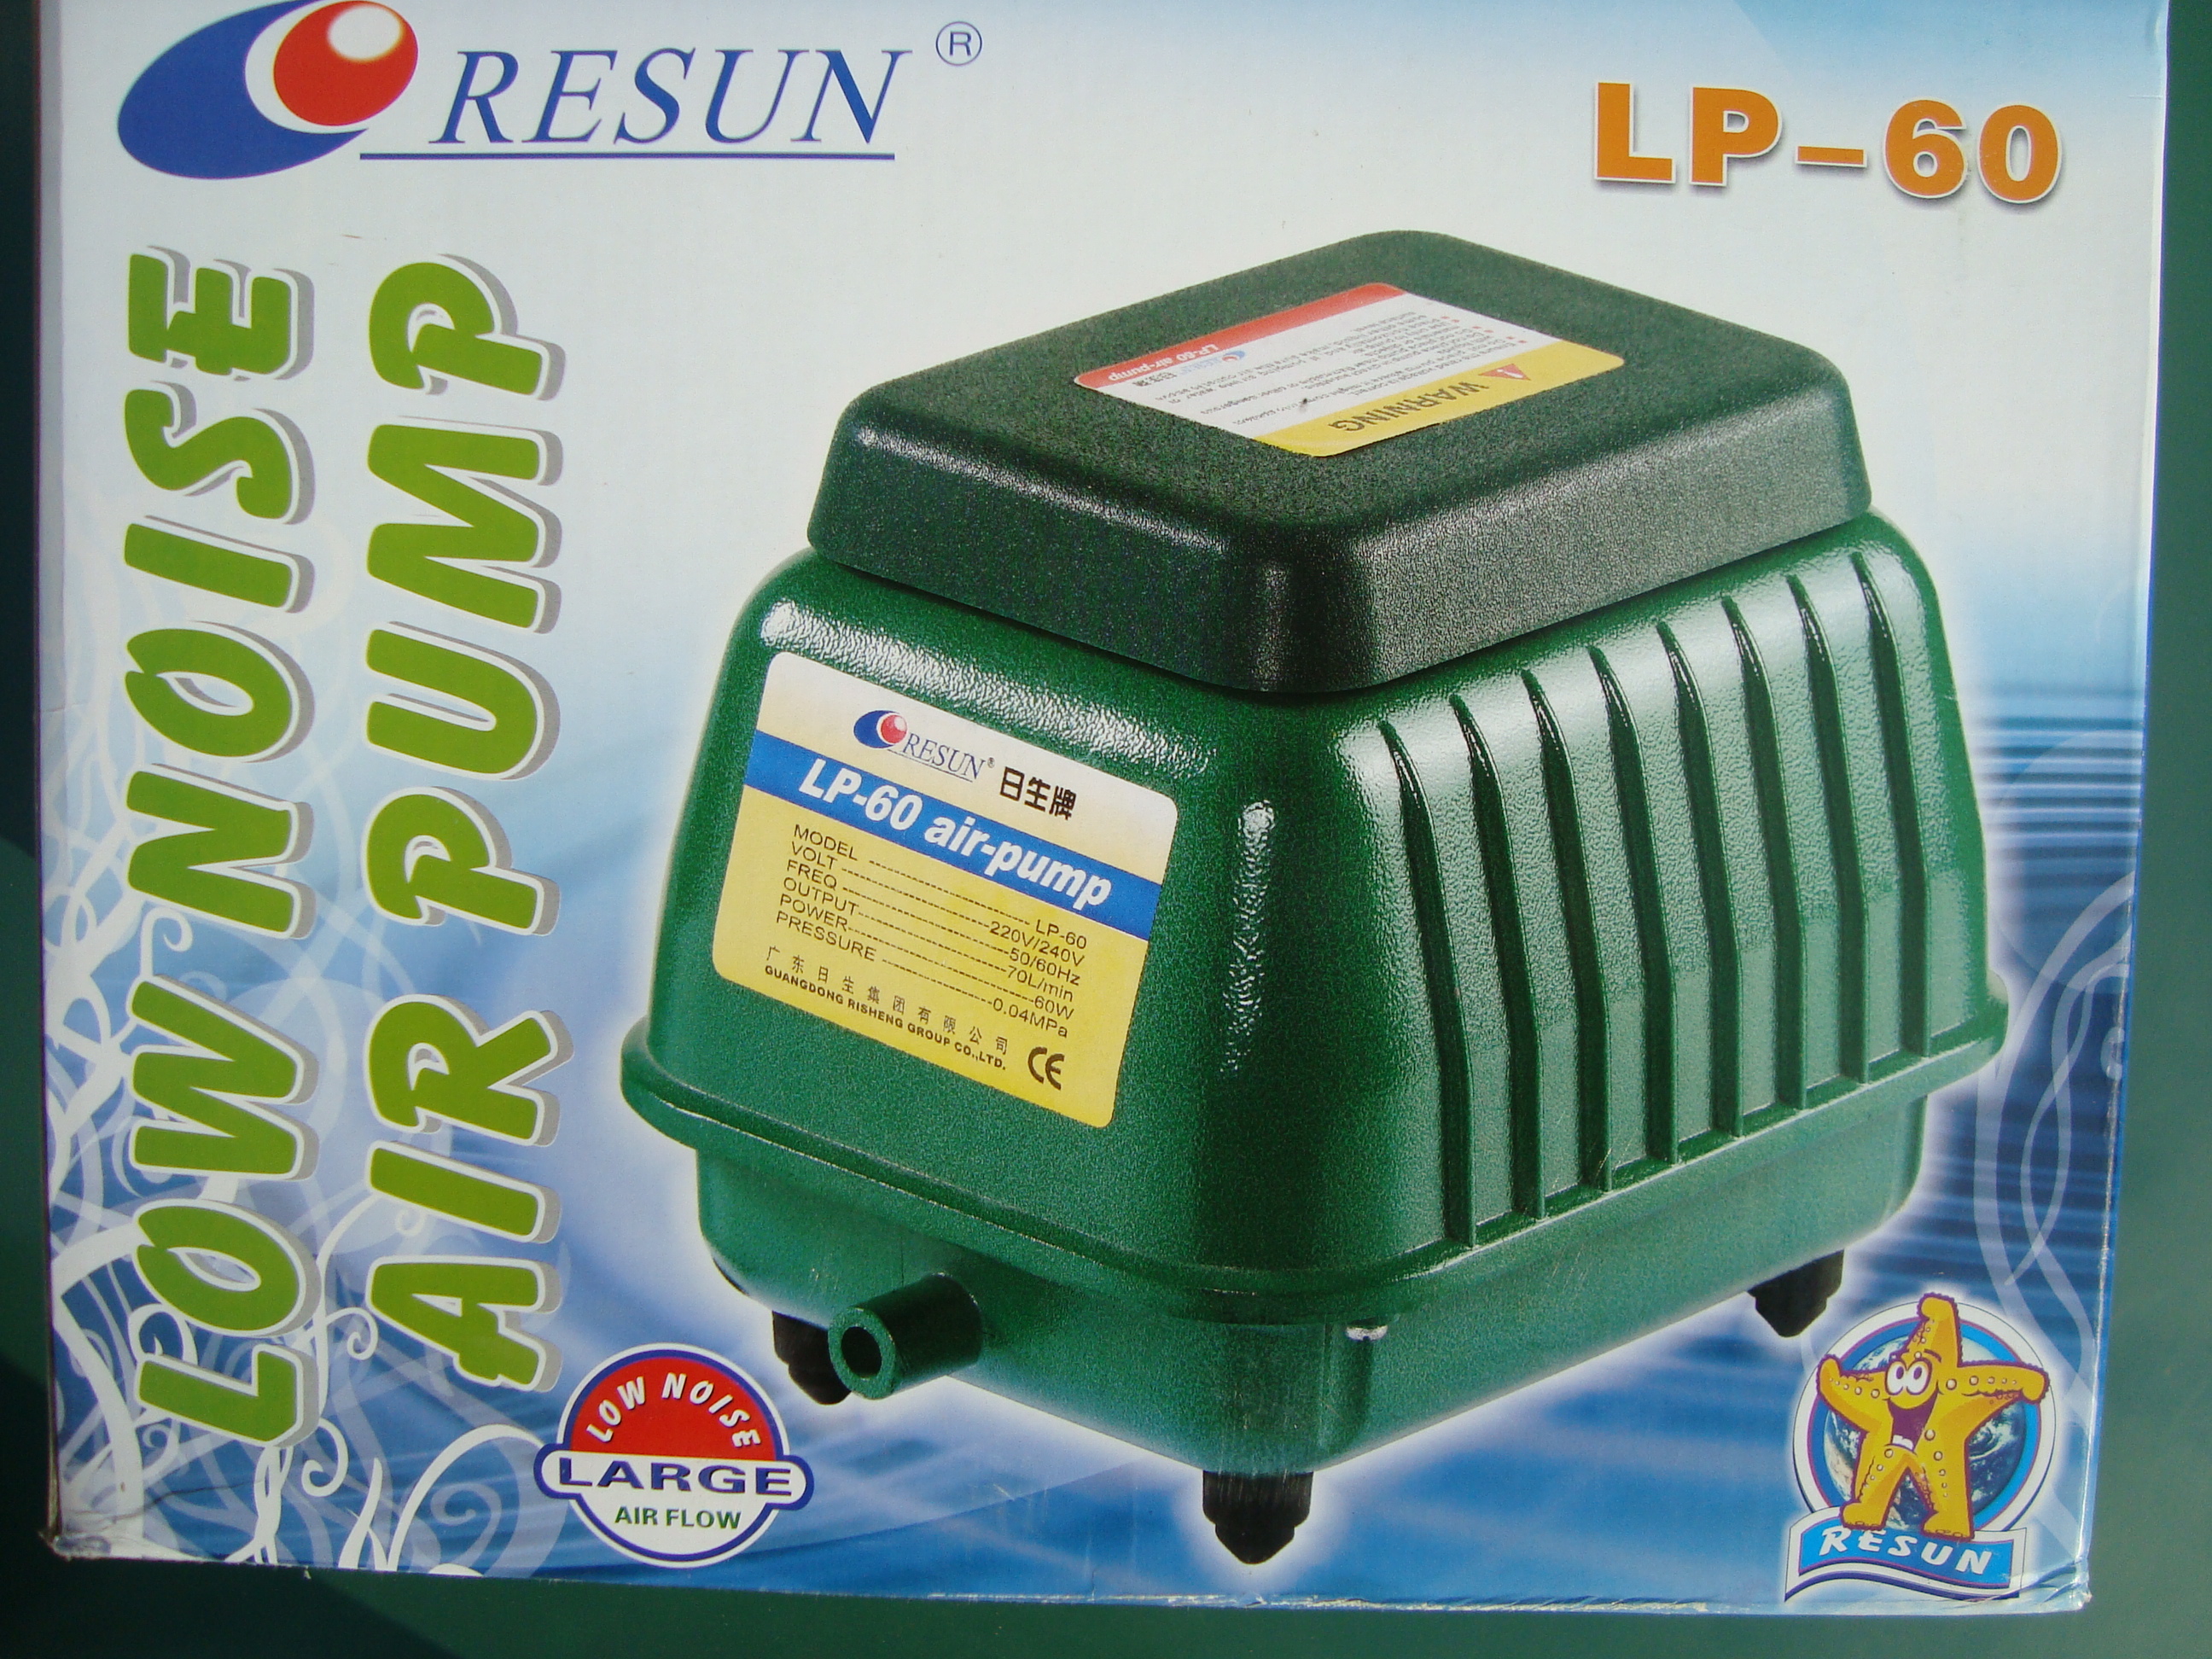 Membránový kompresor LP-60 za 145,-eur